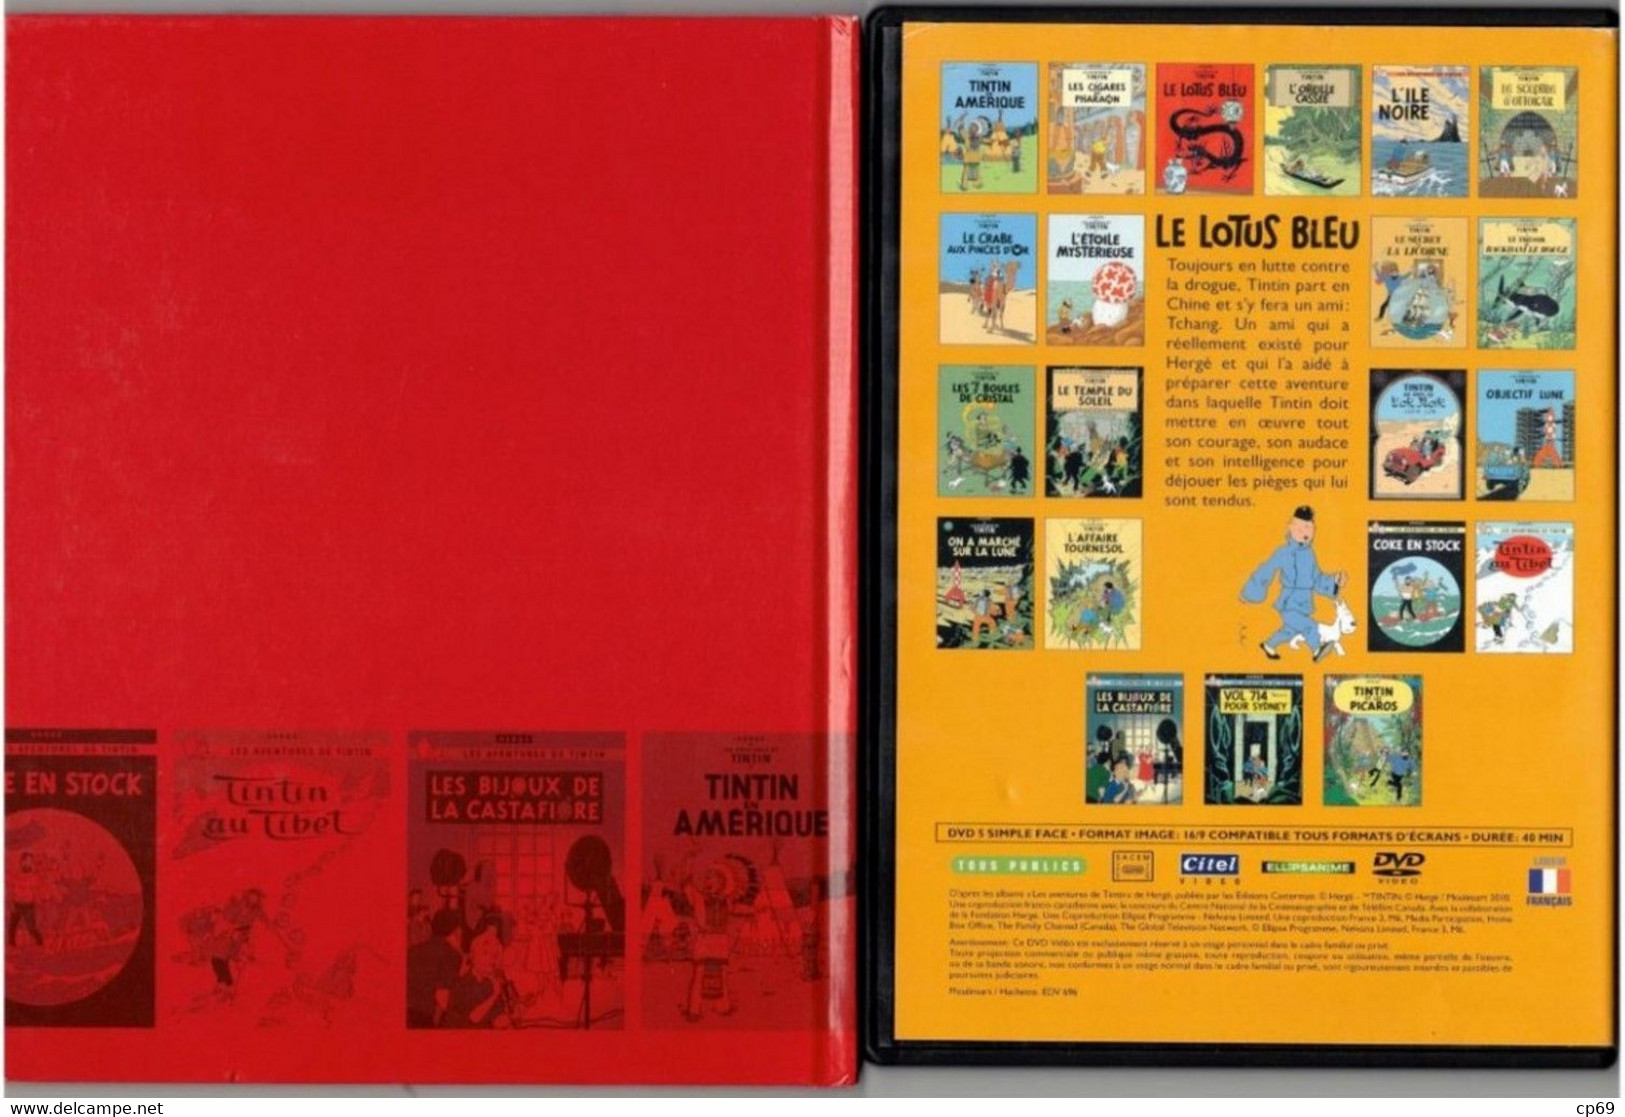 Tintin Hergé / Moulinsart 2010 Milou Chien Dog Cane Le Lotus Bleu N°1 DVD + Livret Explicatif En B.Etat - Cartoons